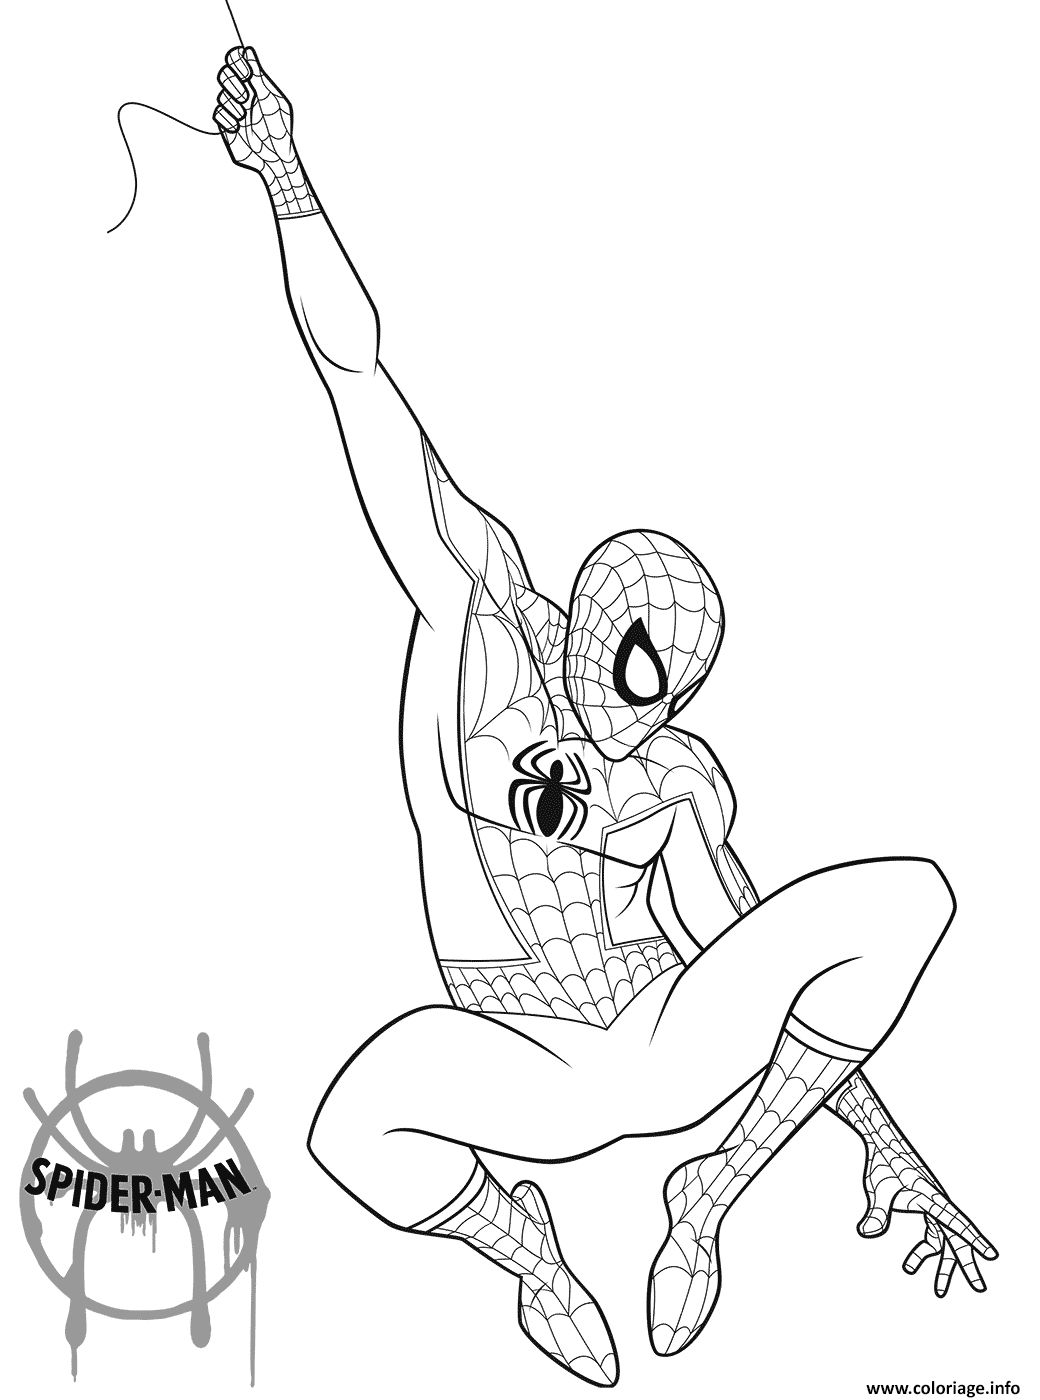 Coloriage Spider Man 2018 Dessin Spider-Man À Imprimer avec Spiderman A Imprimer